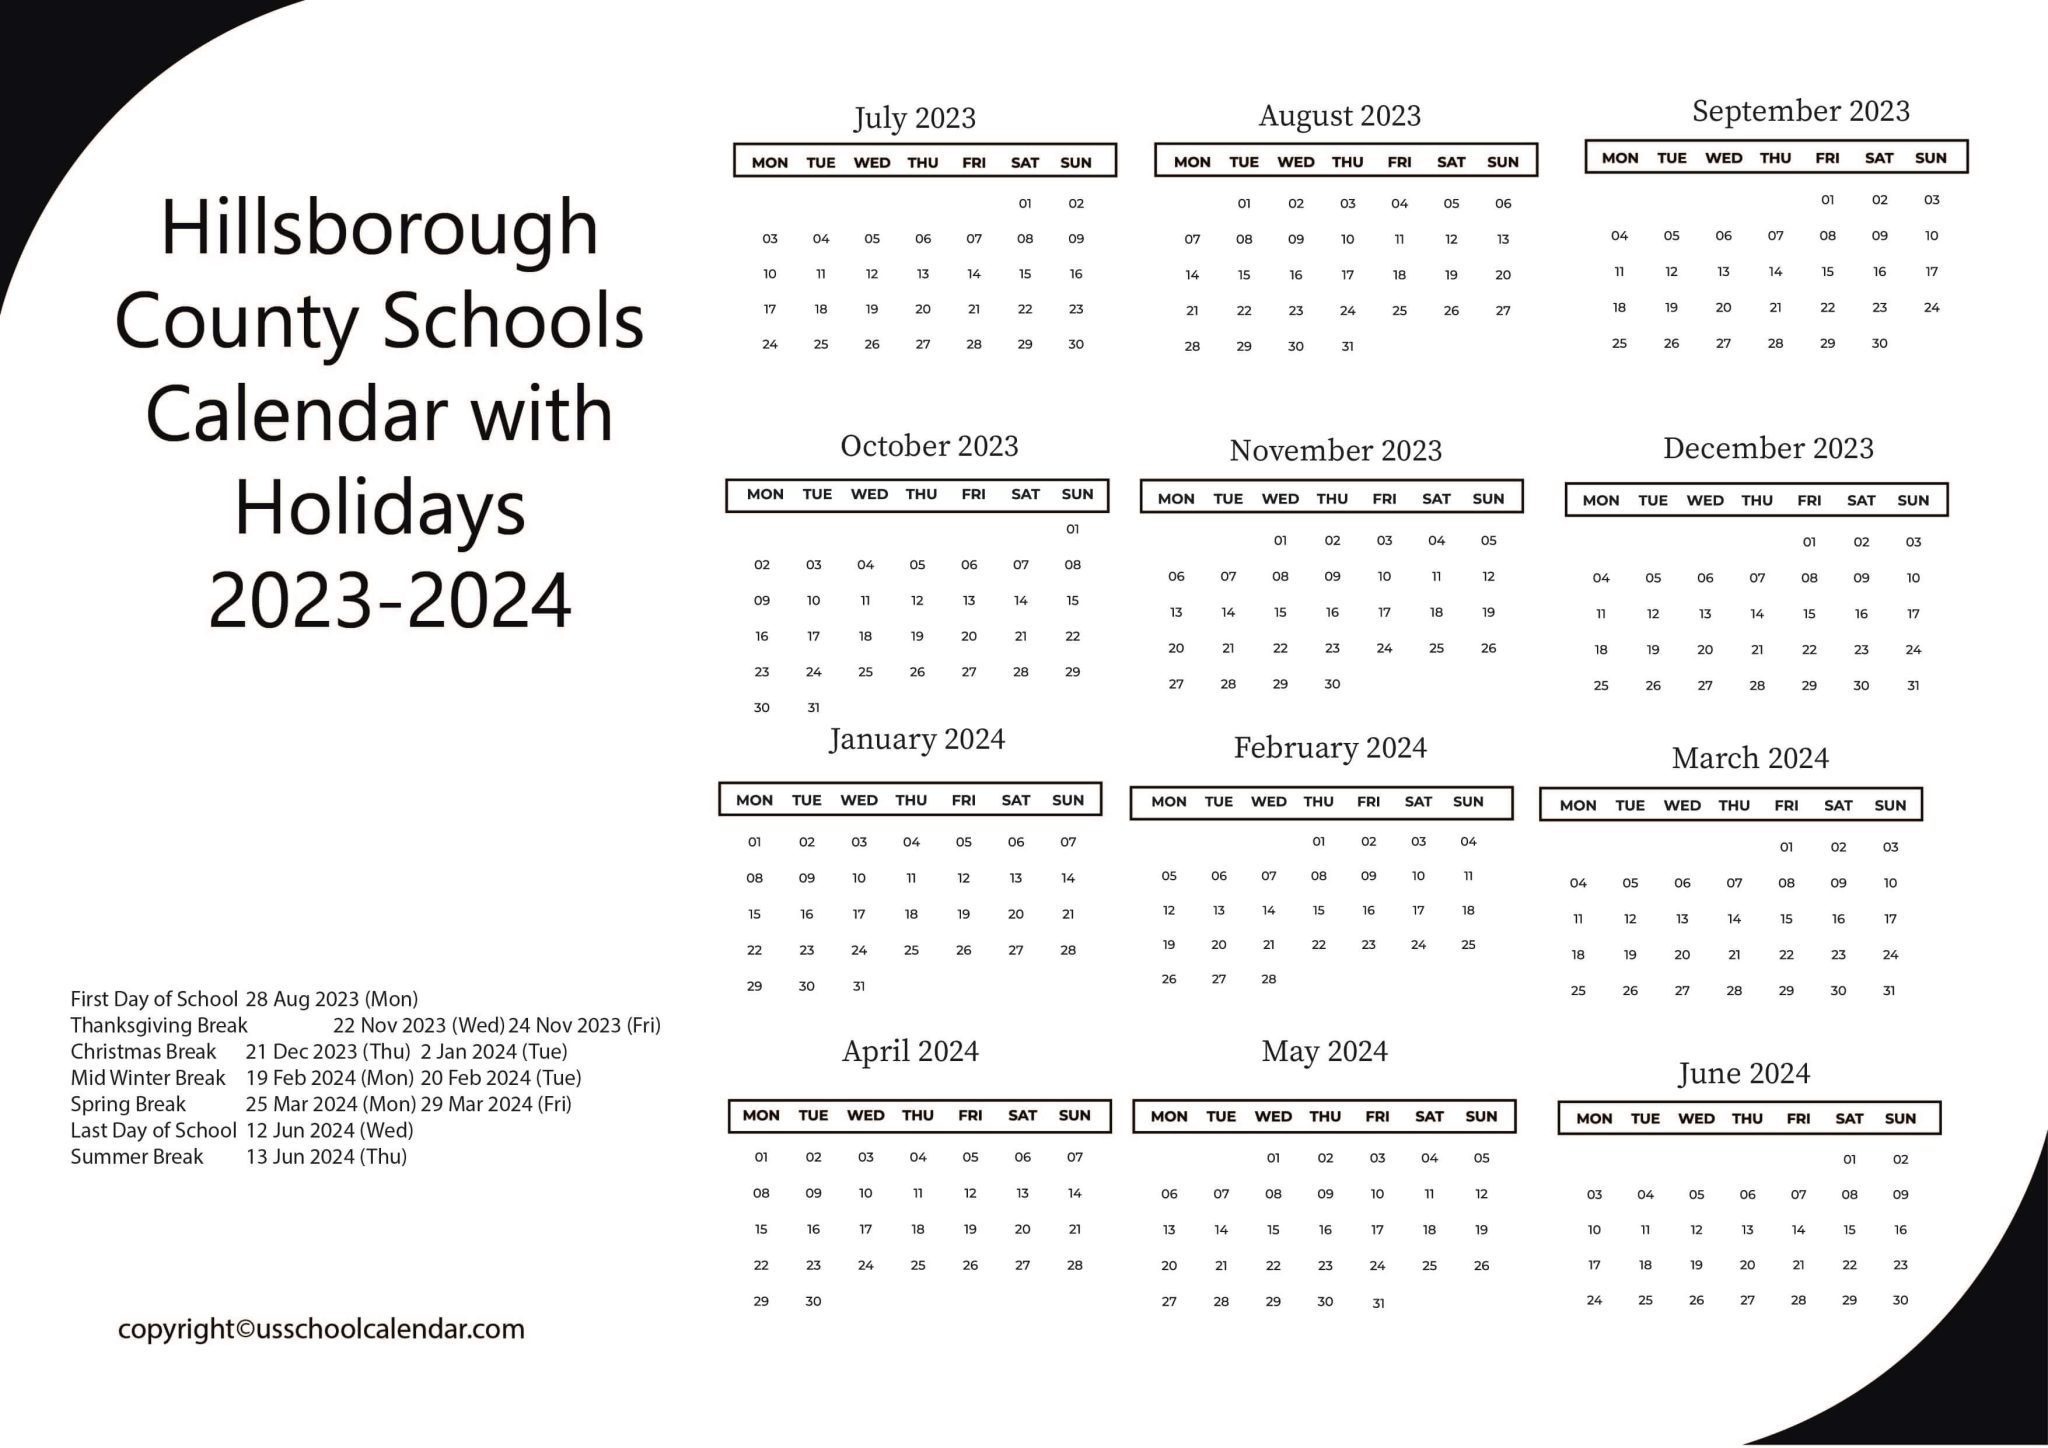 WCPSS Wake County School Calendar With Holidays 2023 2024 2024